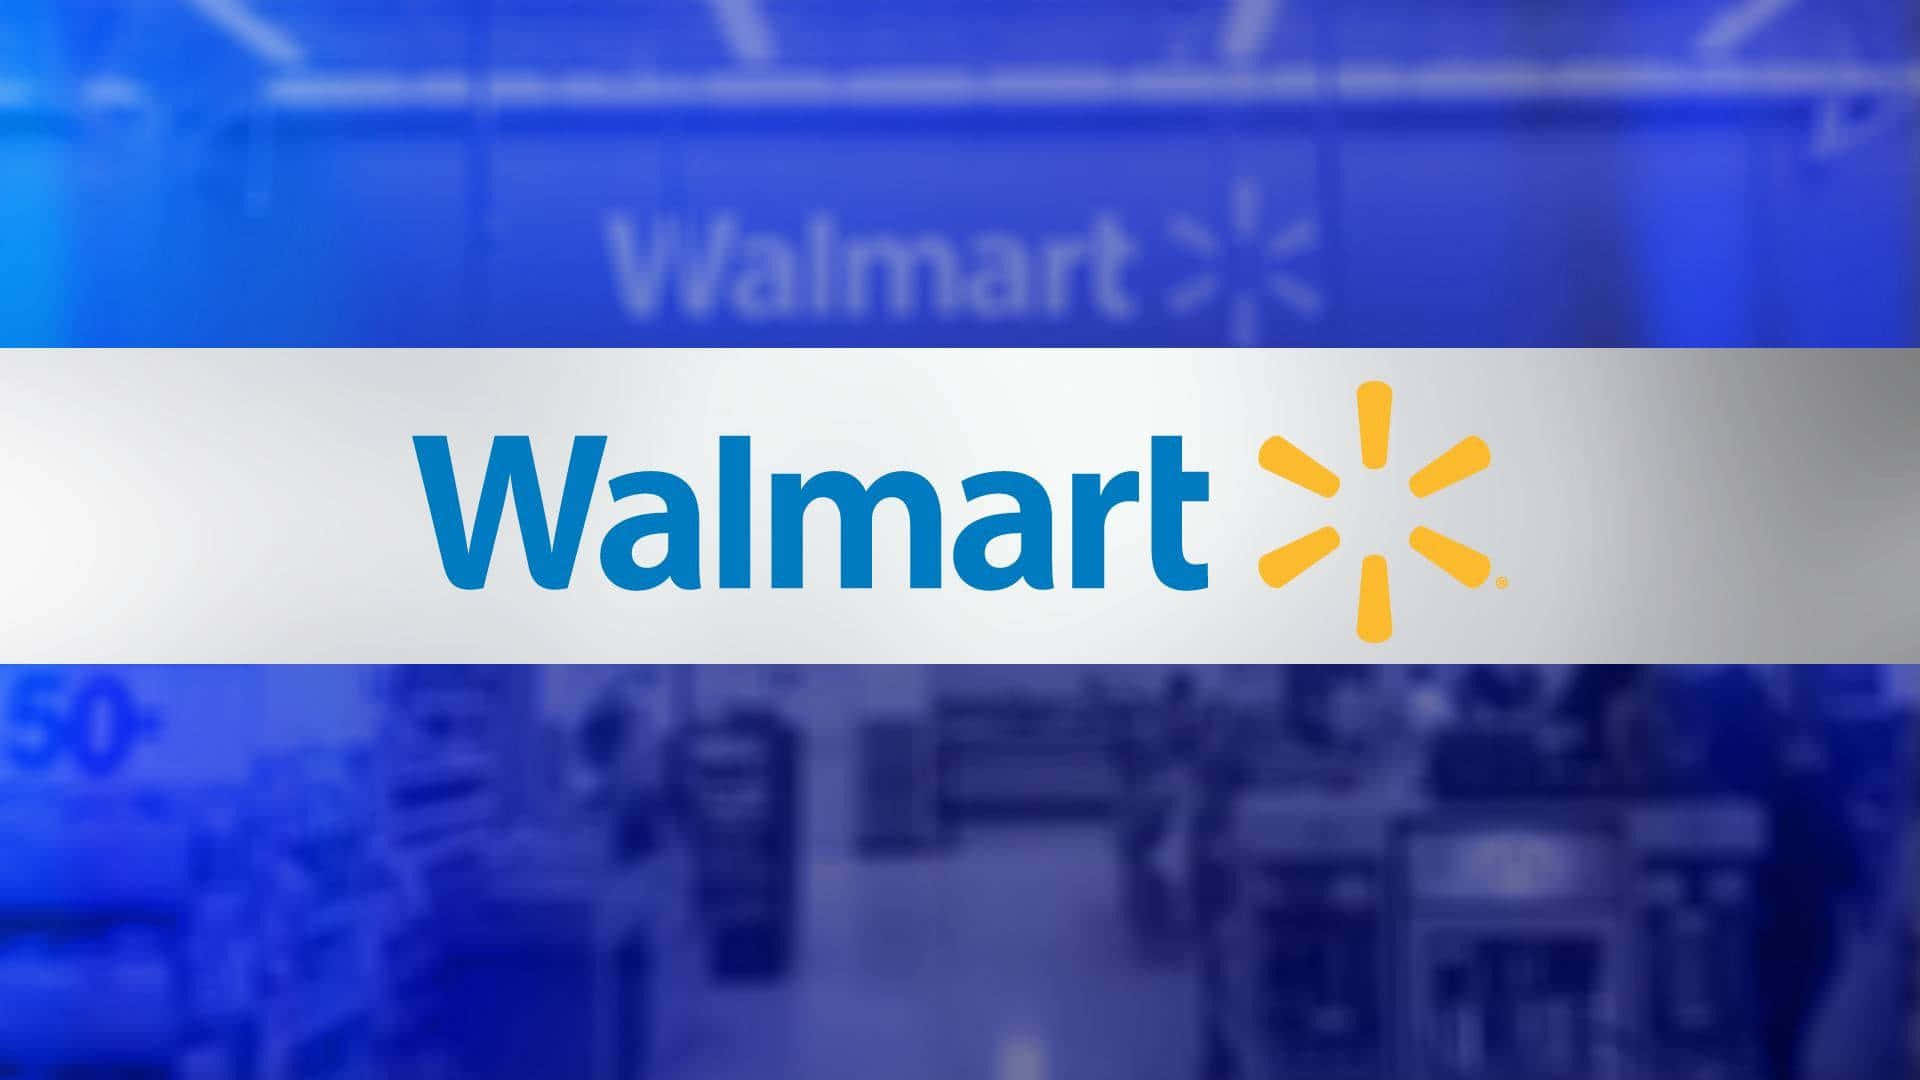 Walmart Logo With Blue Background